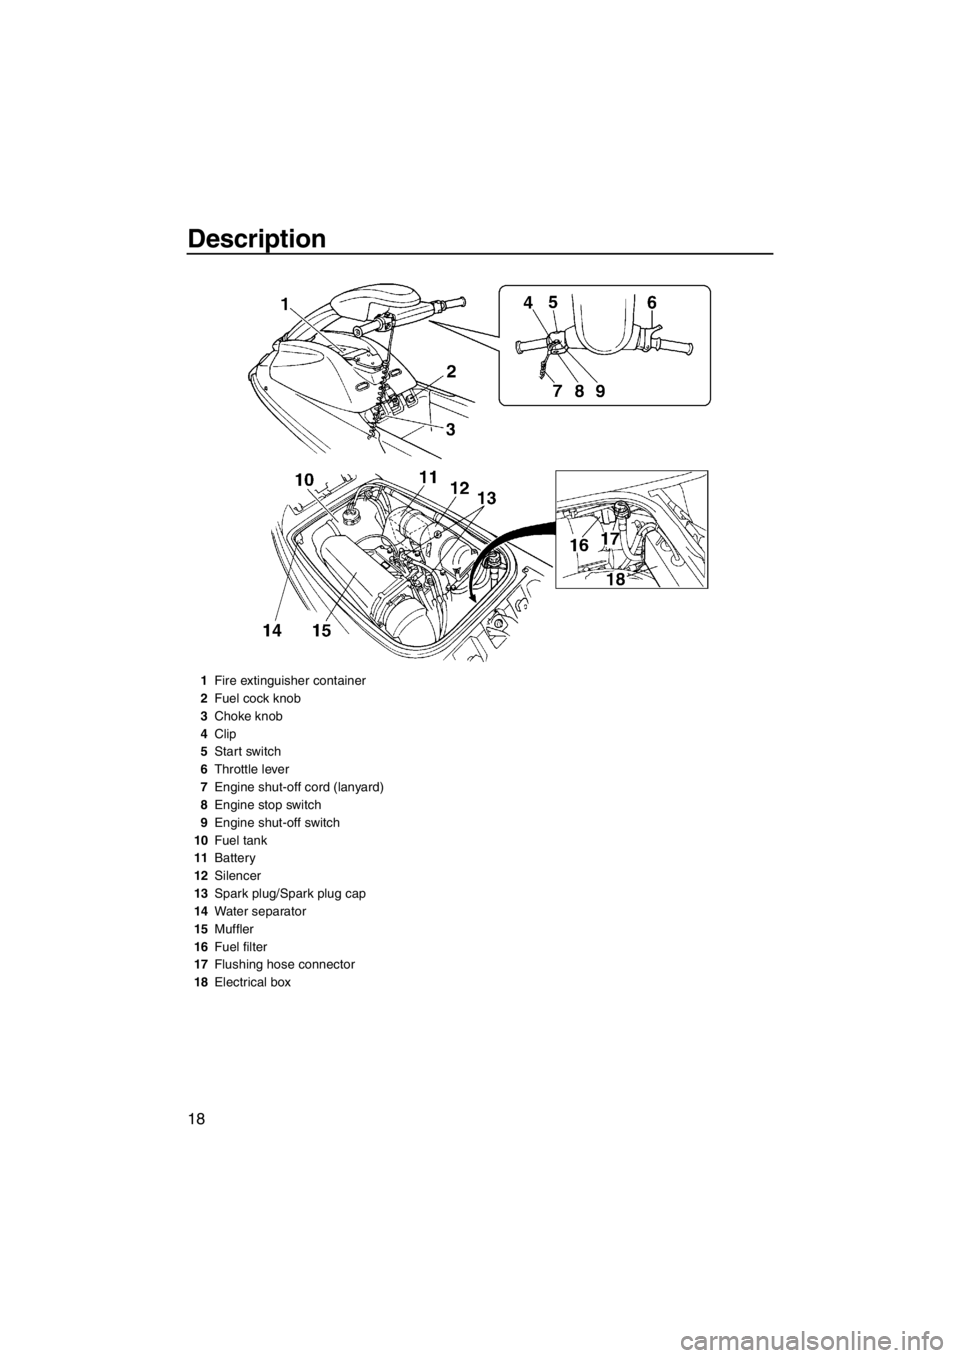 YAMAHA SUPERJET 2013  Owners Manual Description
18
1Fire extinguisher container
2 Fuel cock knob
3 Choke knob
4 Clip
5 Start switch
6 Throttle lever
7 Engine shut-off cord (lanyard)
8 Engine stop switch
9 Engine shut-off switch
10 Fuel 